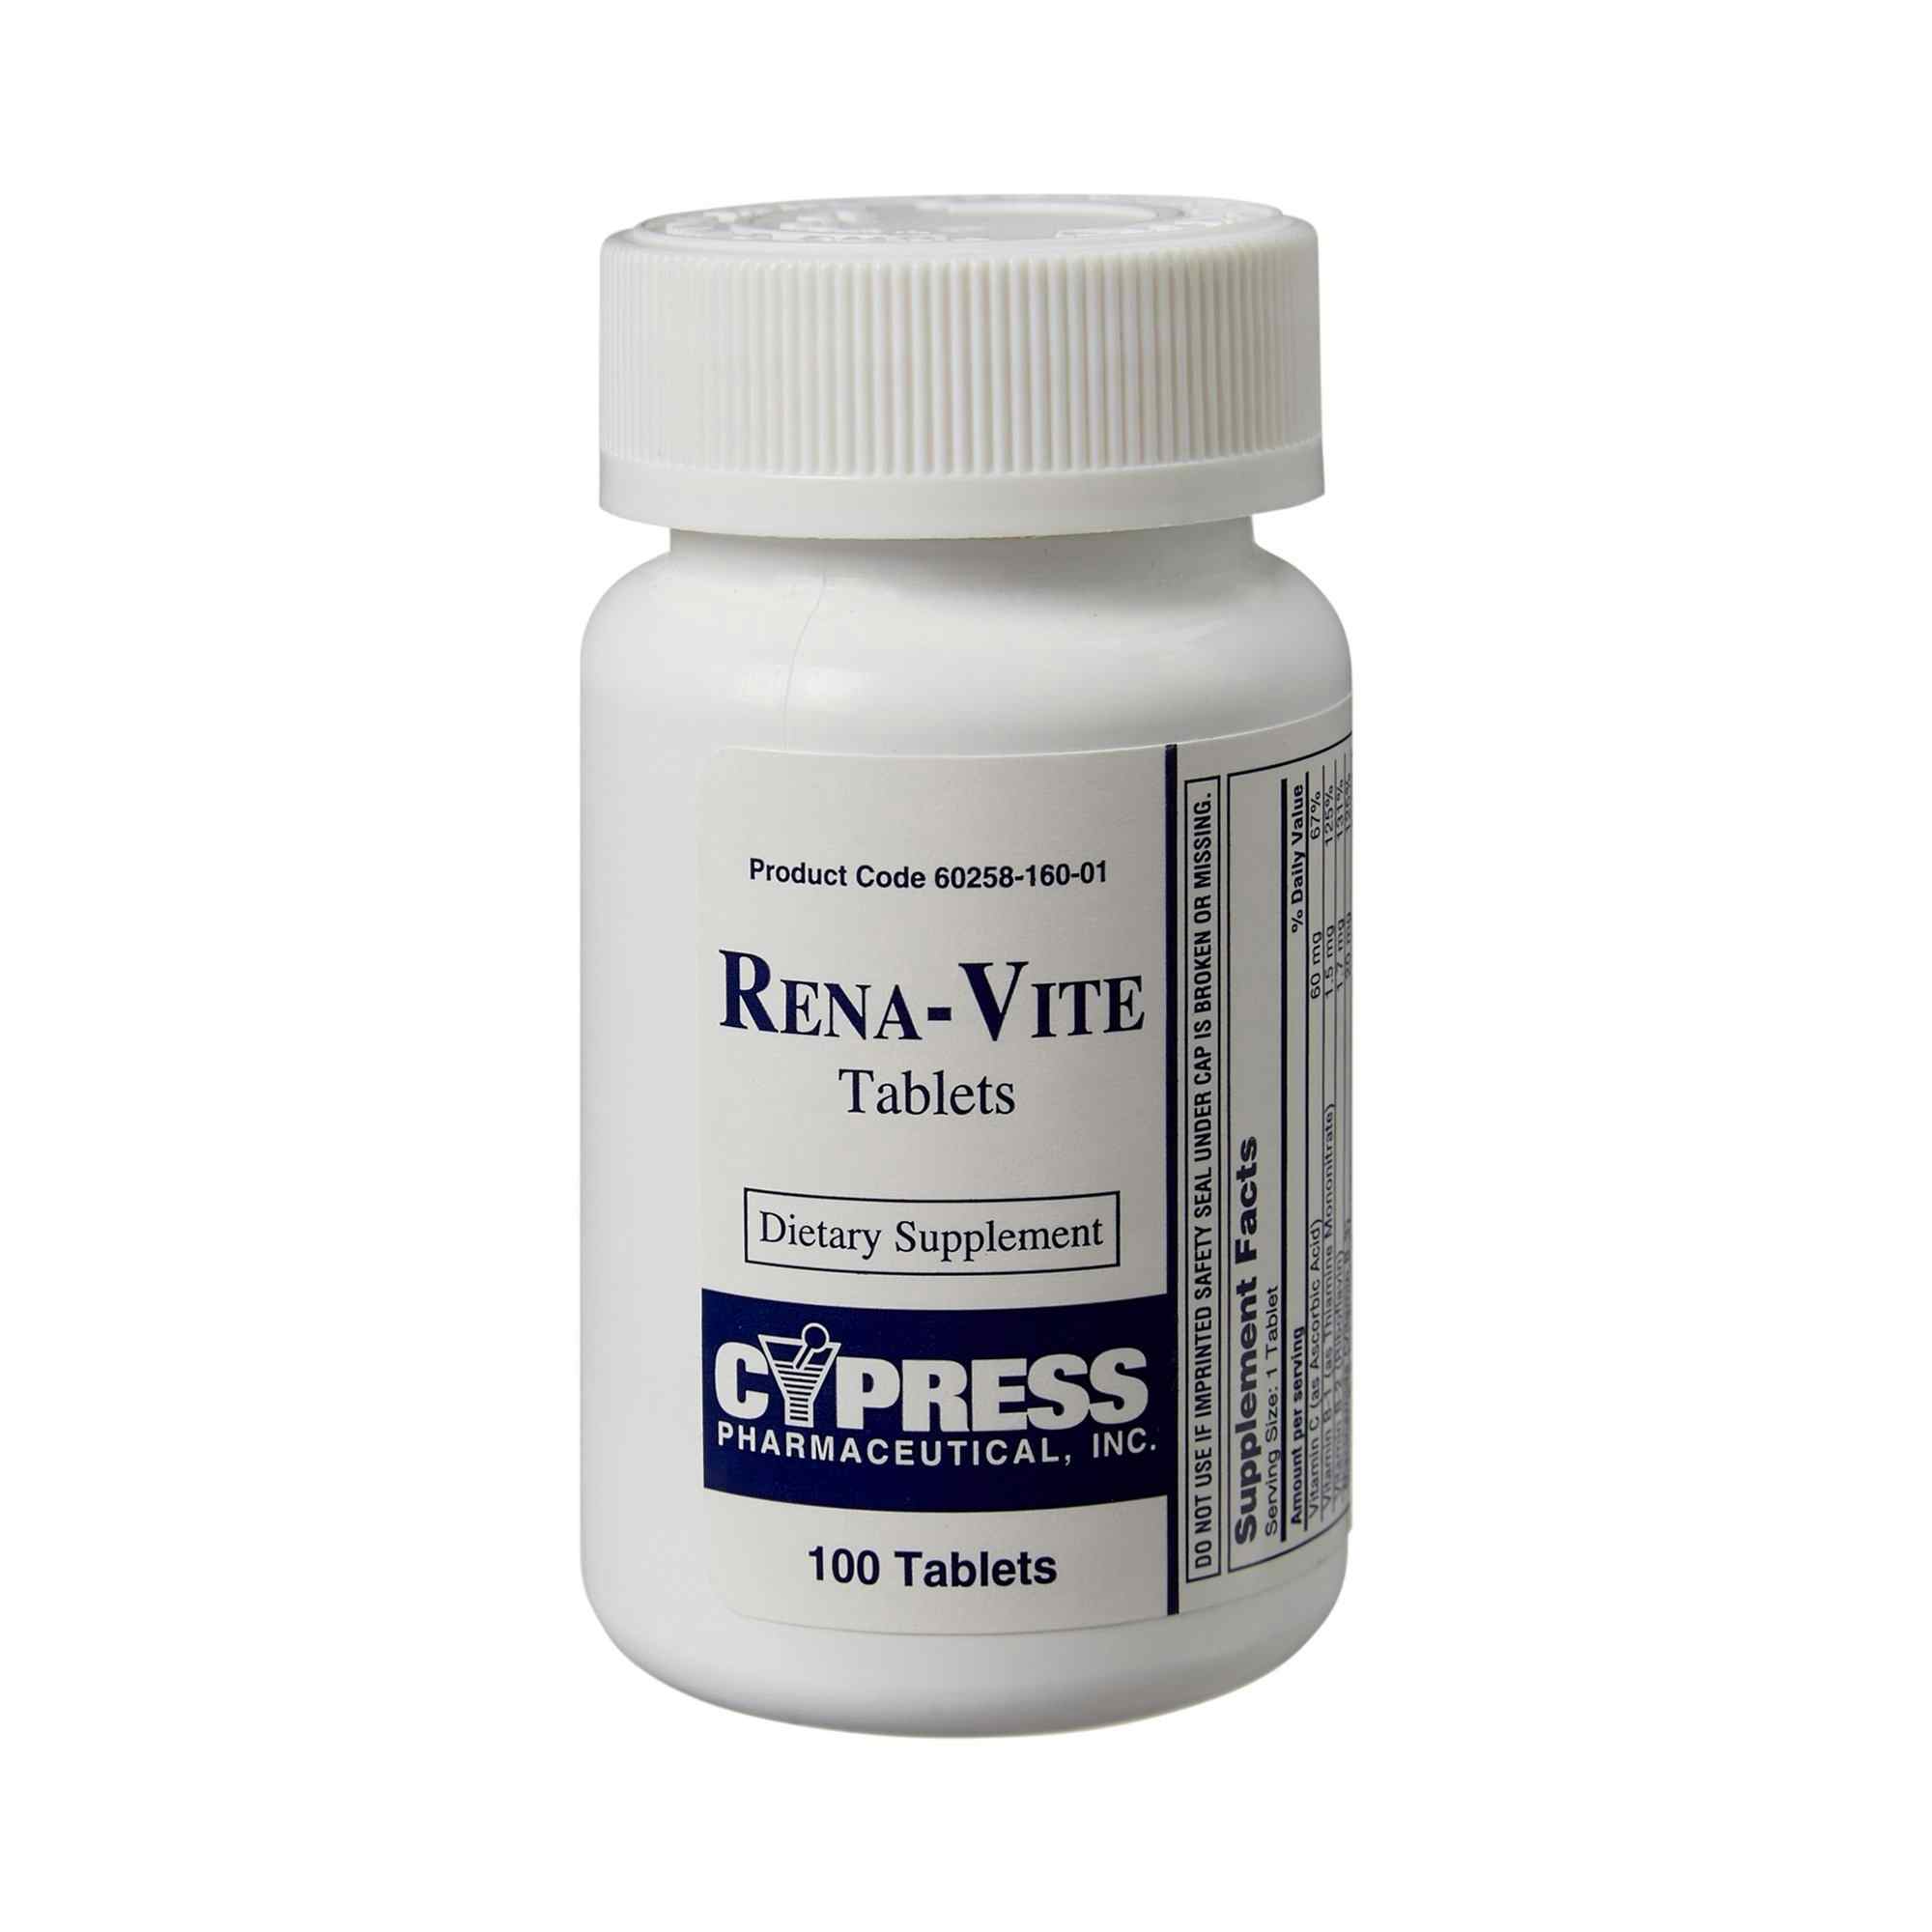 Rena-Vite Folic Acid/Vitamin B Dietary Supplement, 0.8 mg, 100 Tablets, 60258016001, 1 Bottle